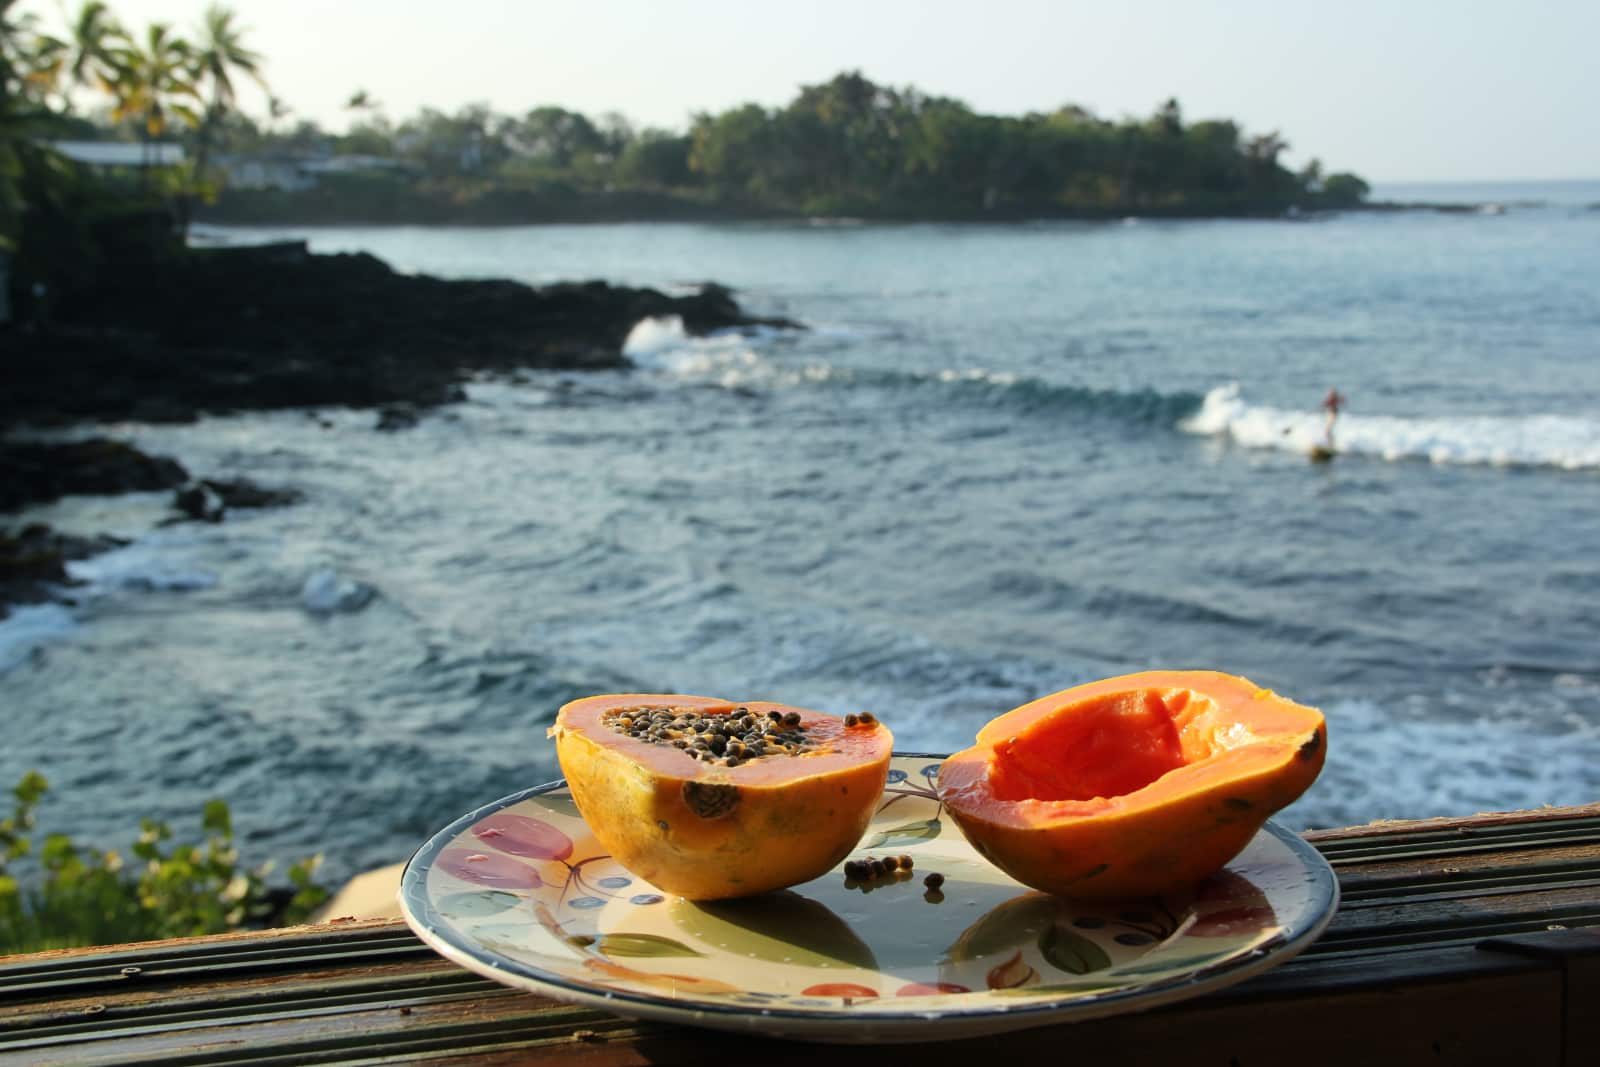 Fresh orange papaya on plate with ocean in background